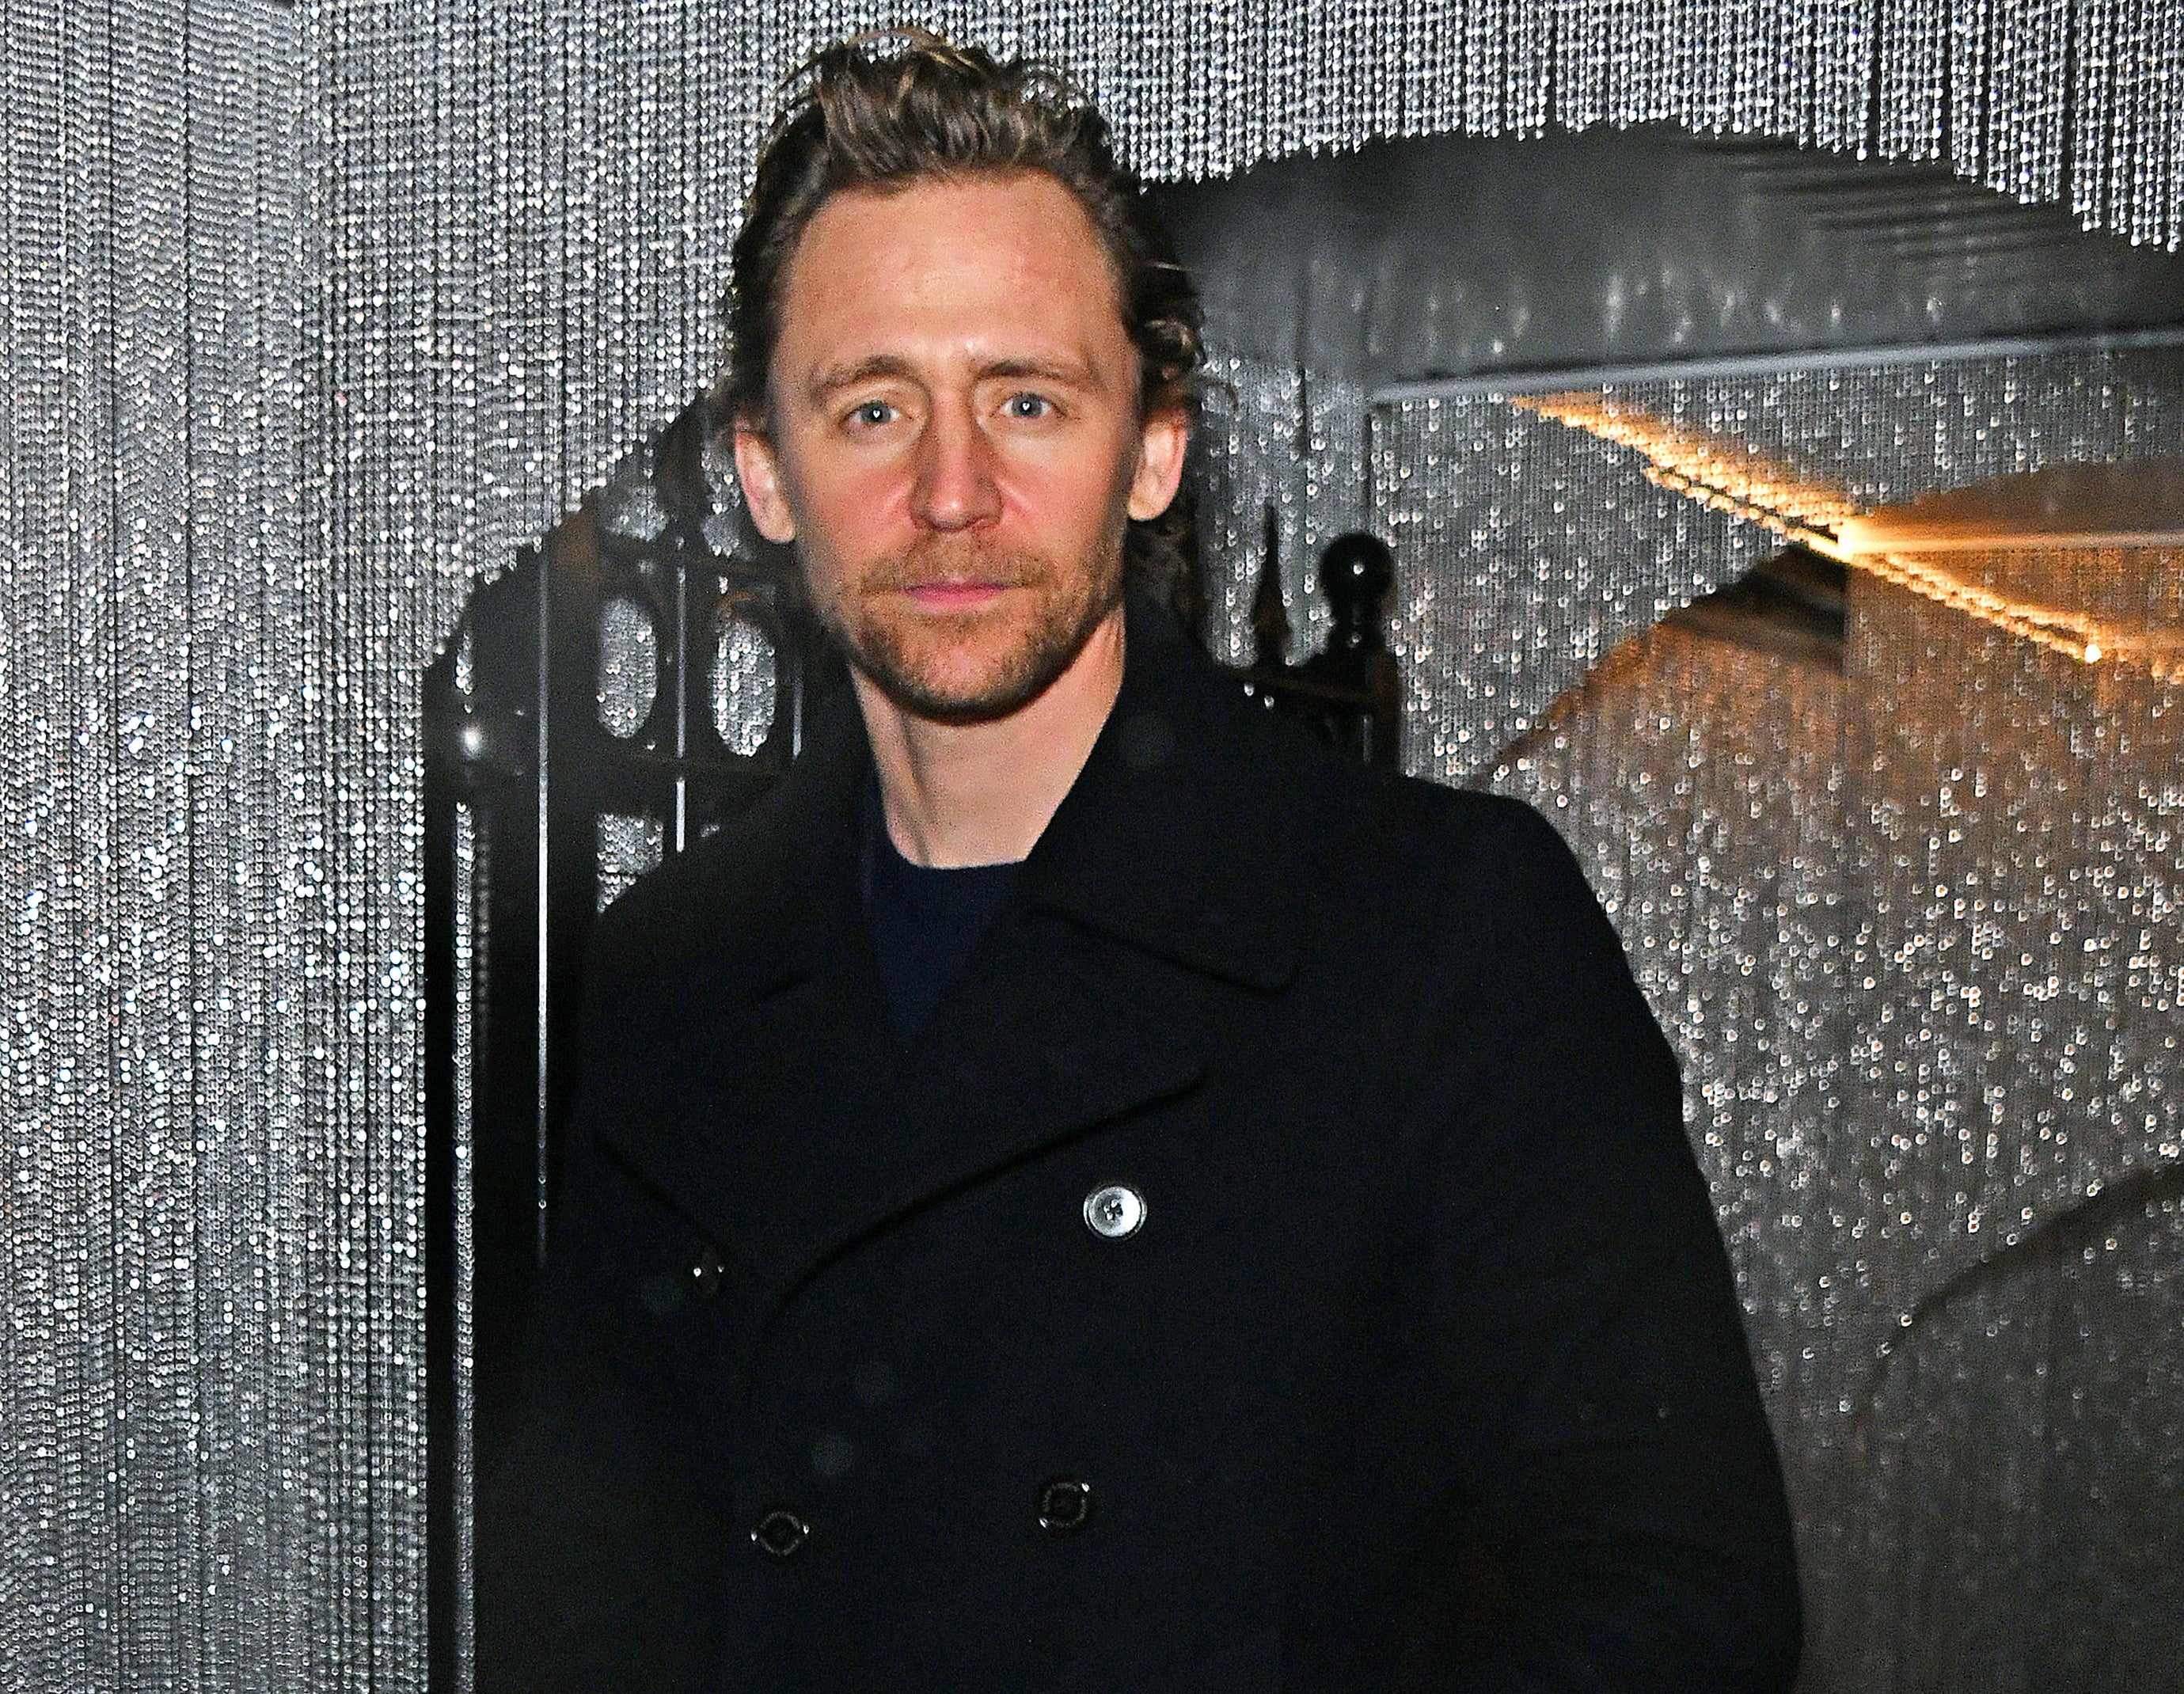 A close-up of Tom in a coat